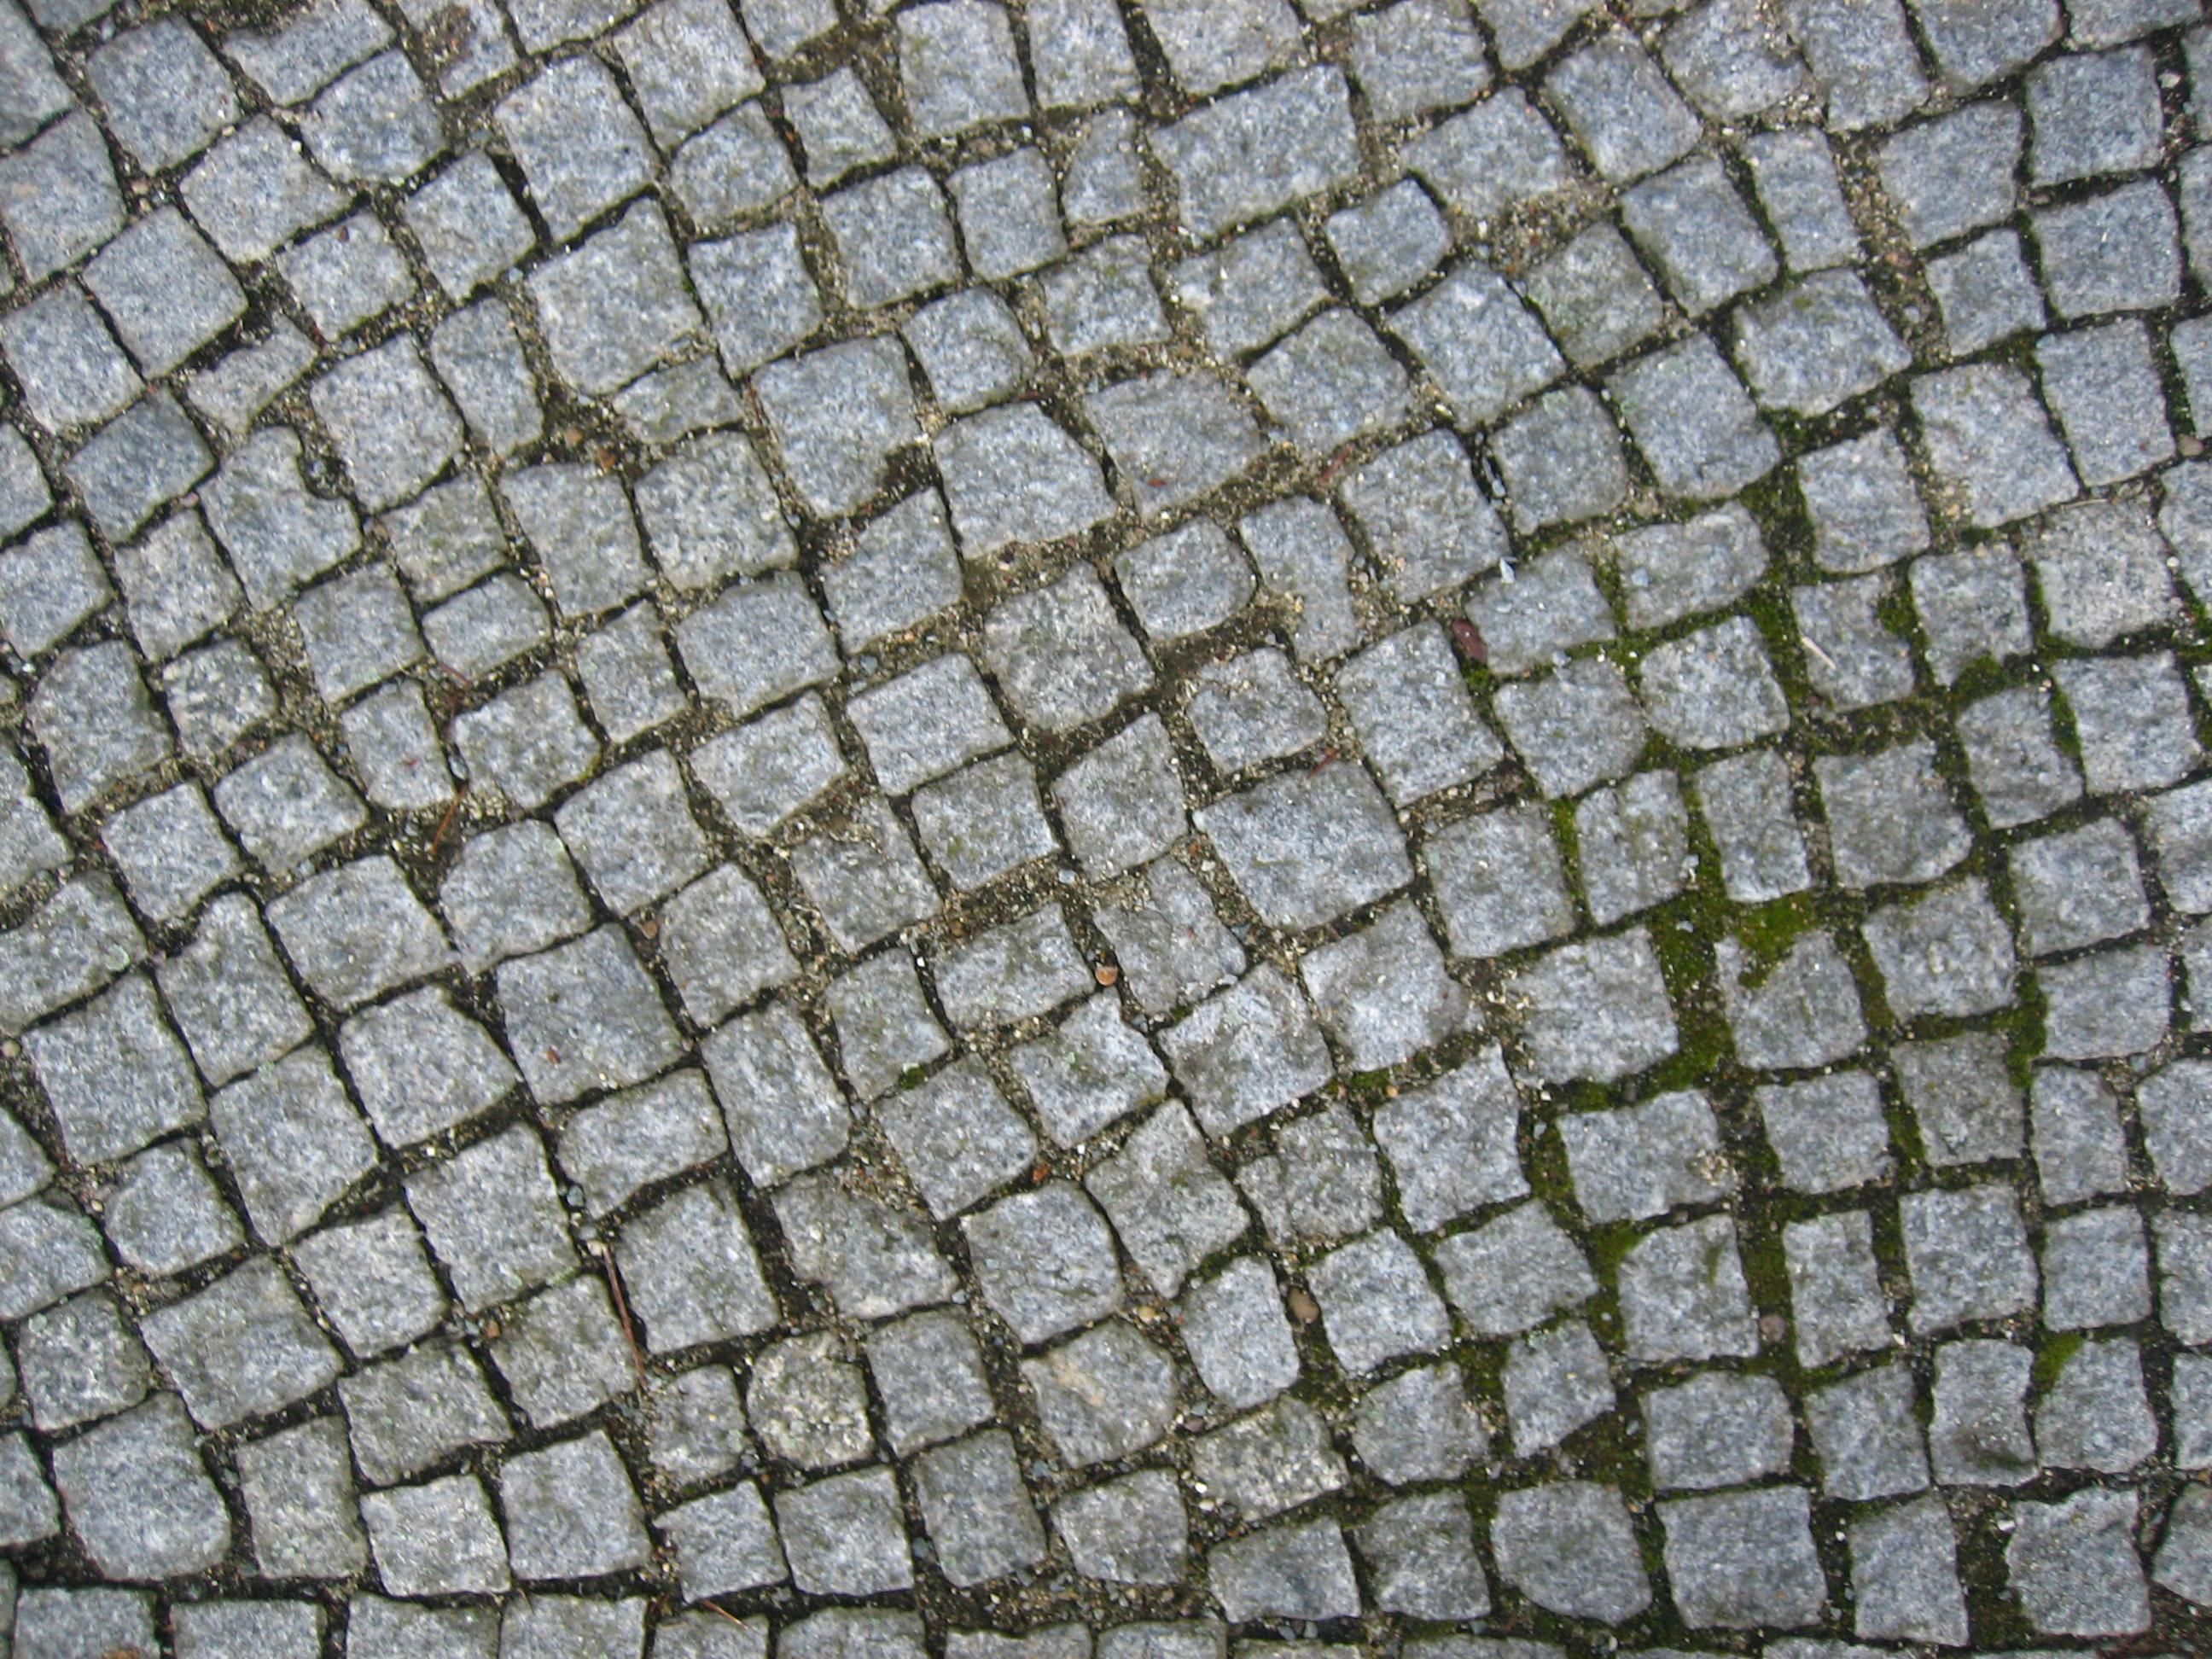 File:Paving stone texture.jpg - Wikimedia Commons